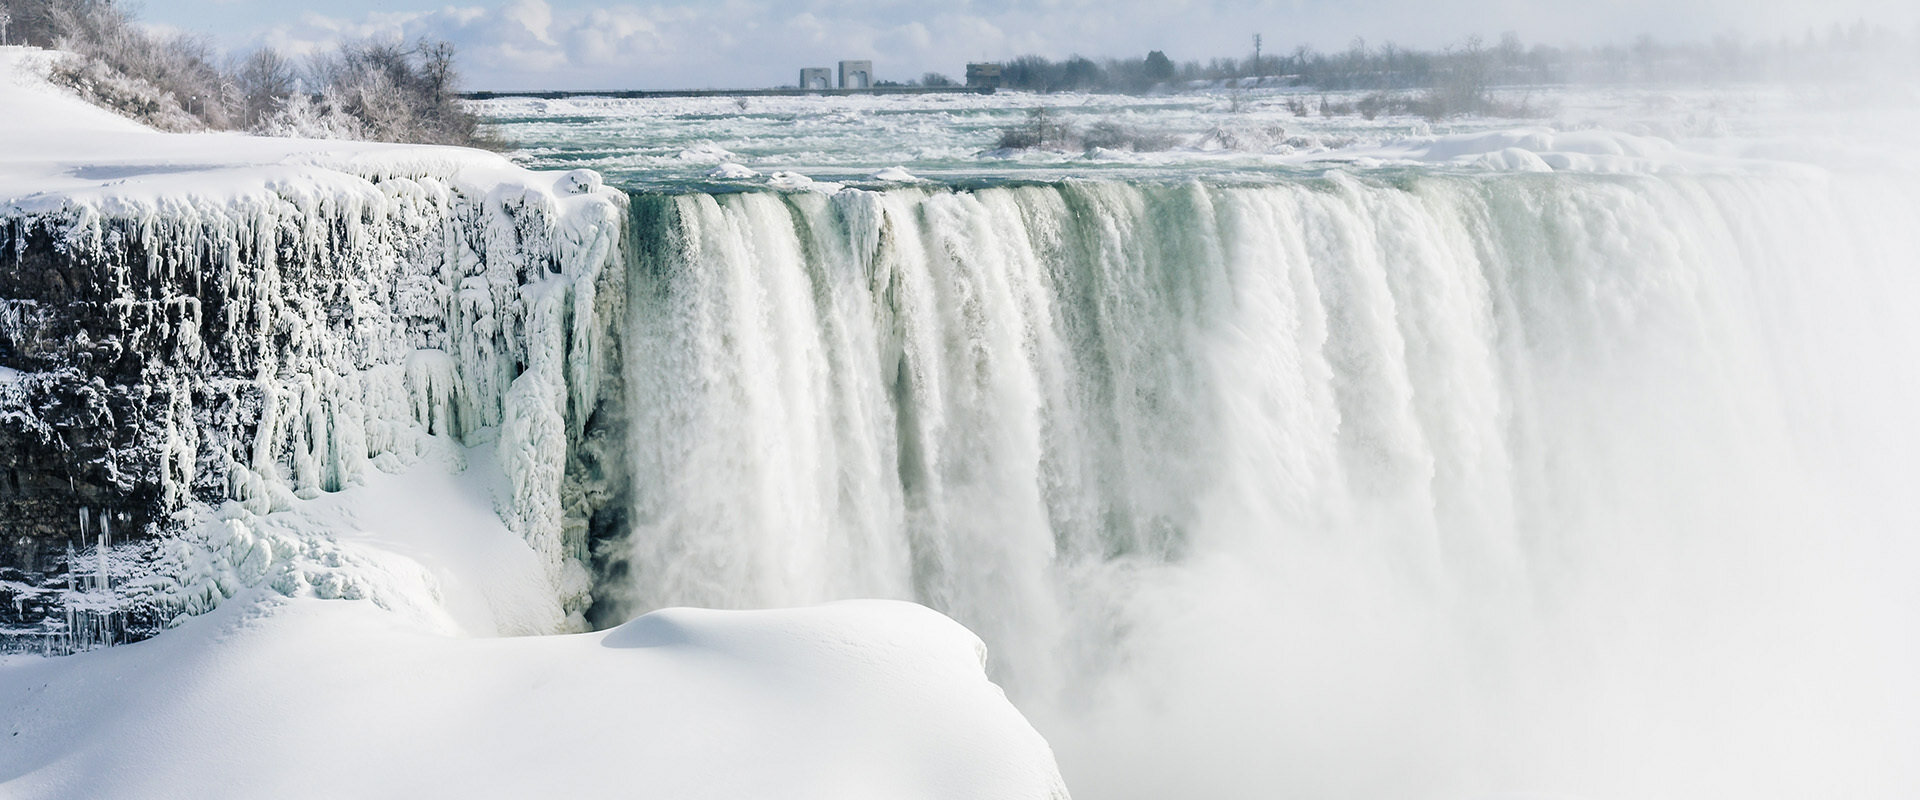 Virtual visit the Niagara Falls, Canada